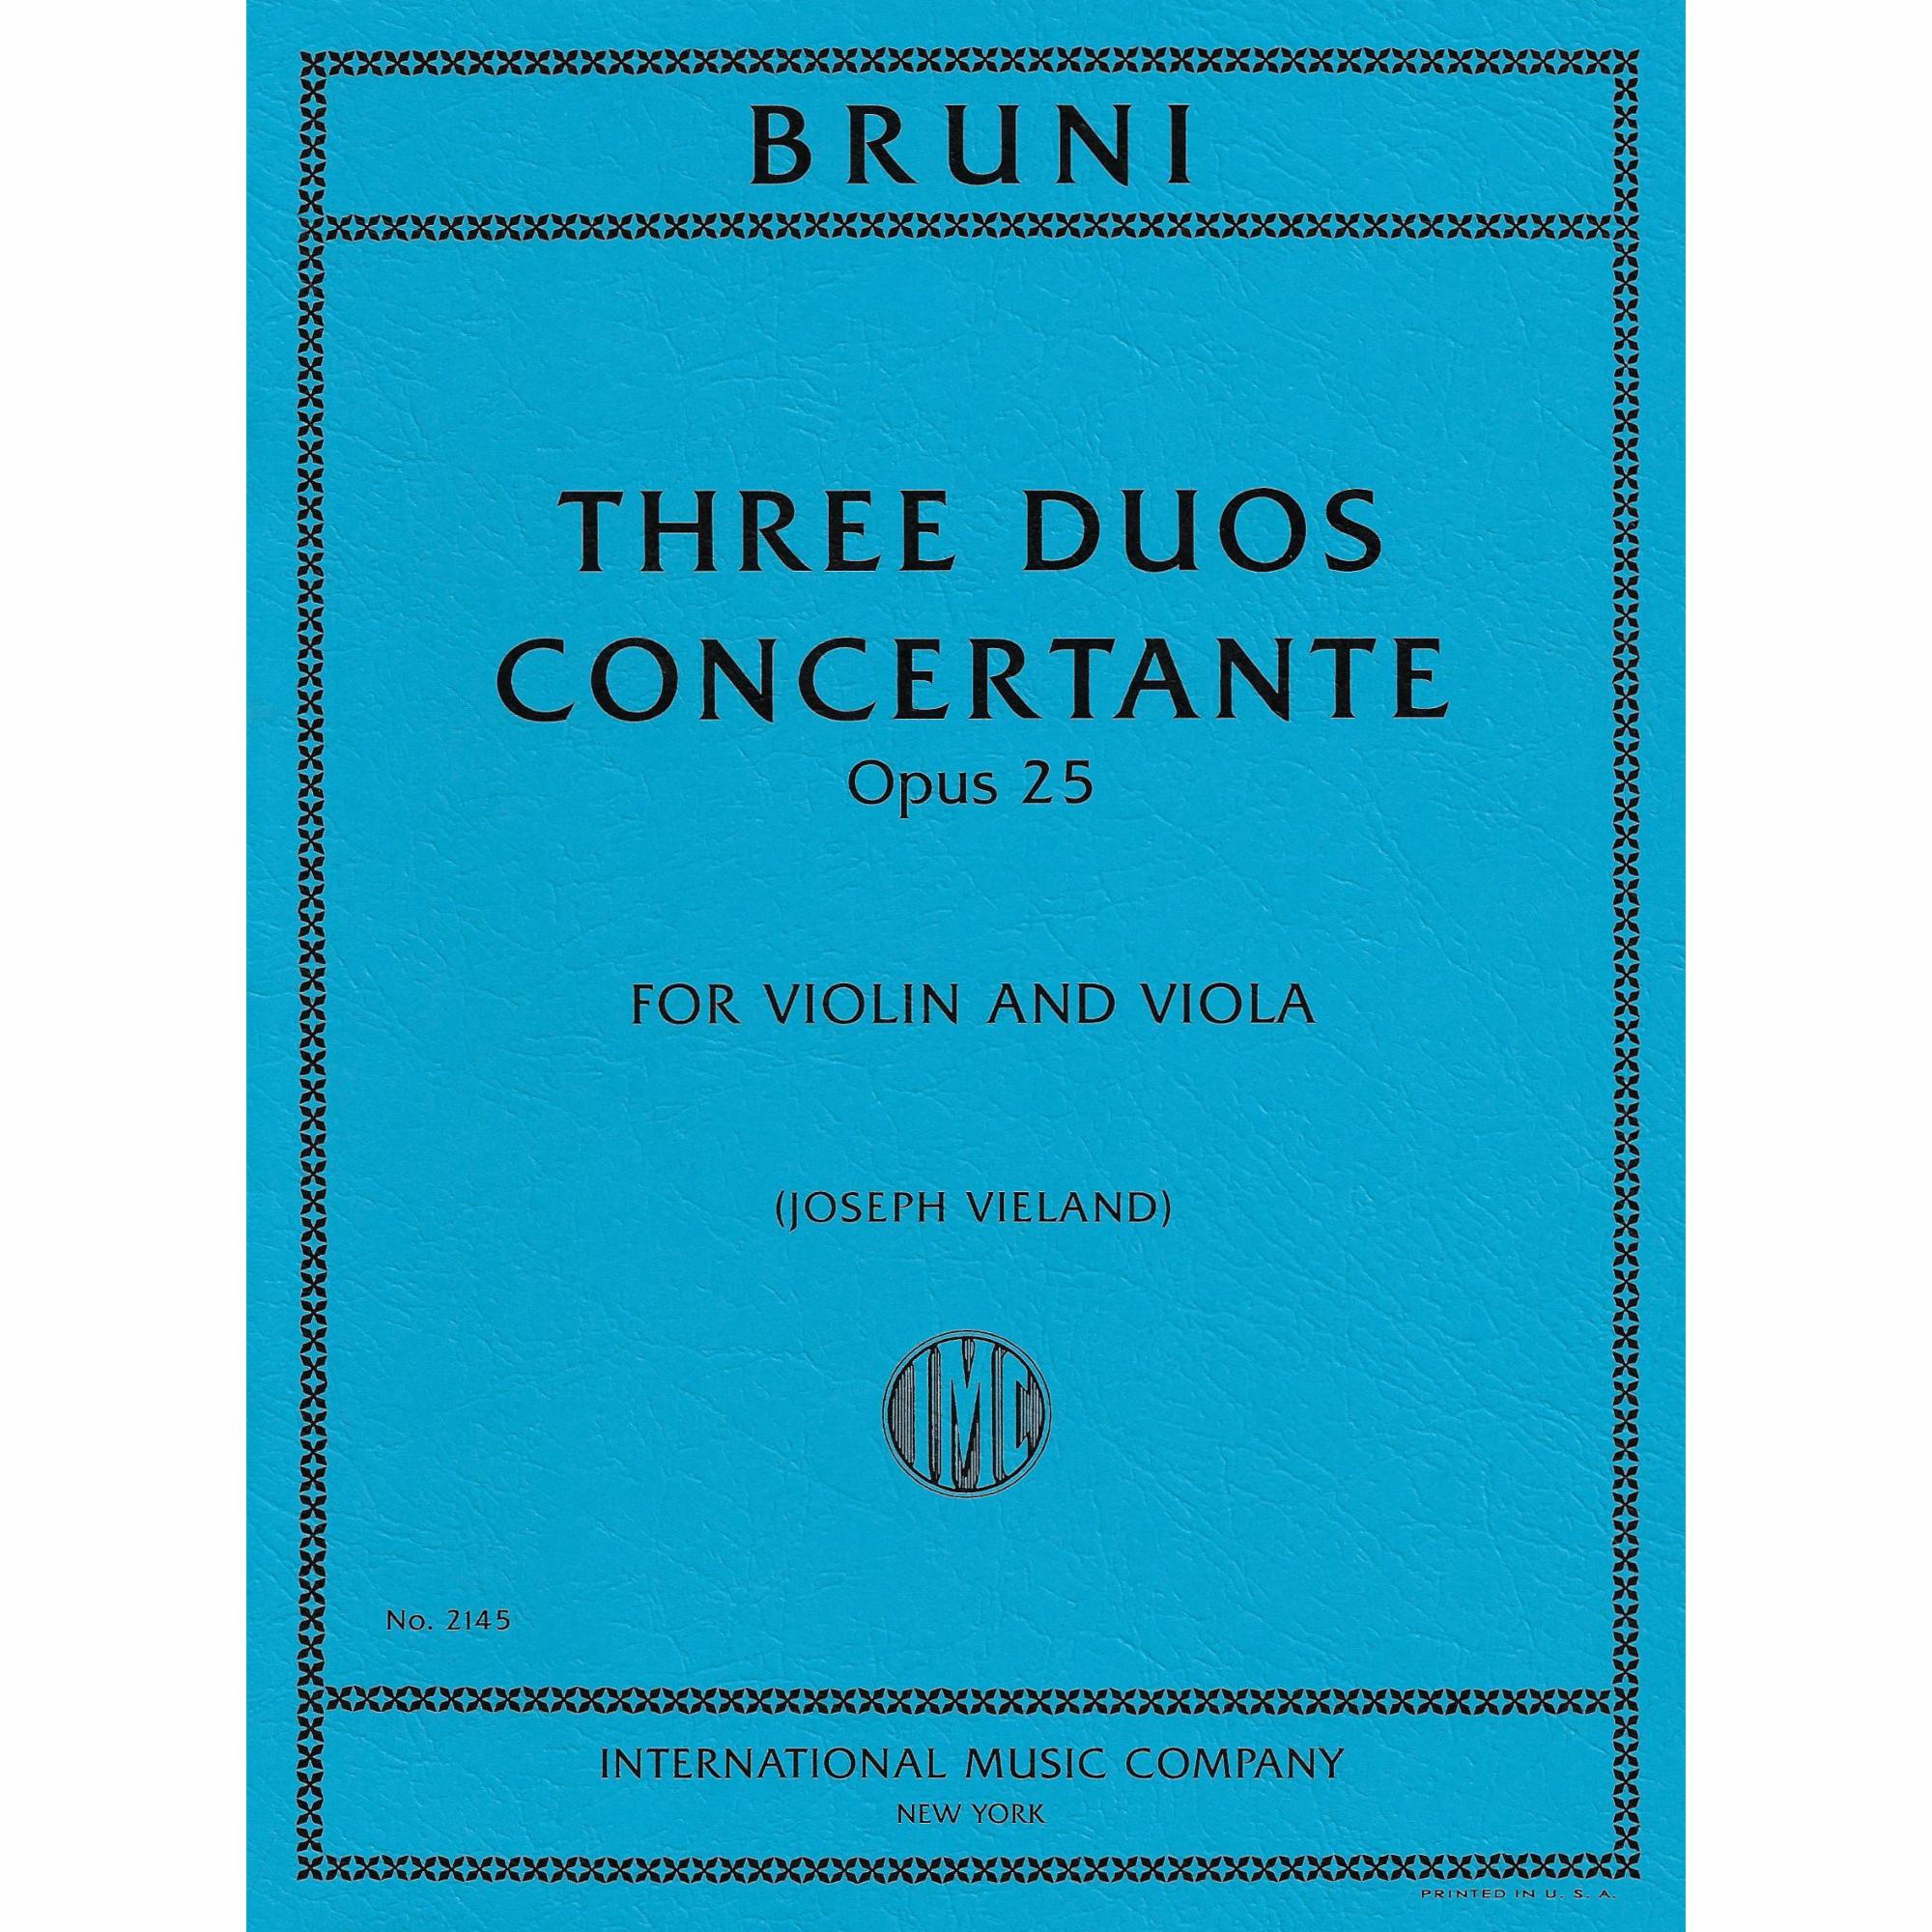 Bruni -- Three Duos Concertantes, Op. 25 for Violin and Viola